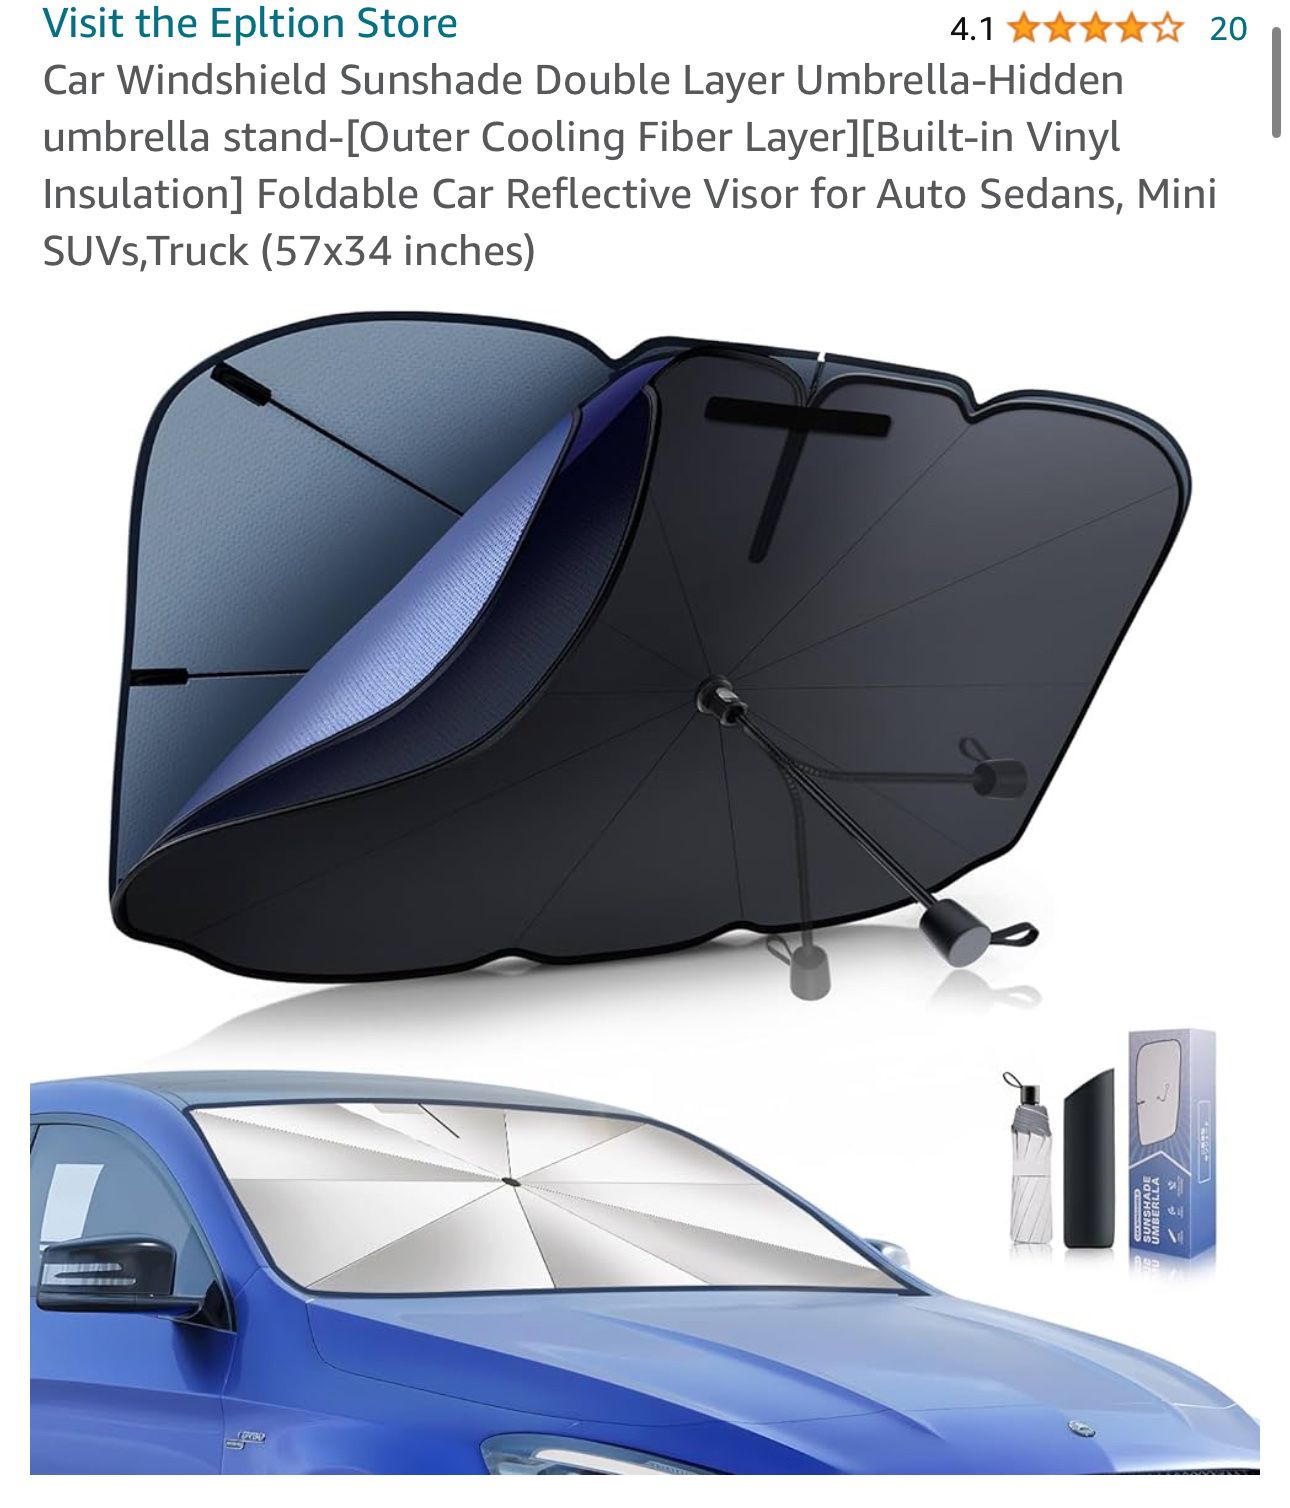 Car Windshield Sunshade Double Layer Umbrella-Hidden umbrella stand-[Outer Cooling Fiber Layer][Built-in Vinyl Insulation] Foldable Car Reflective Vis